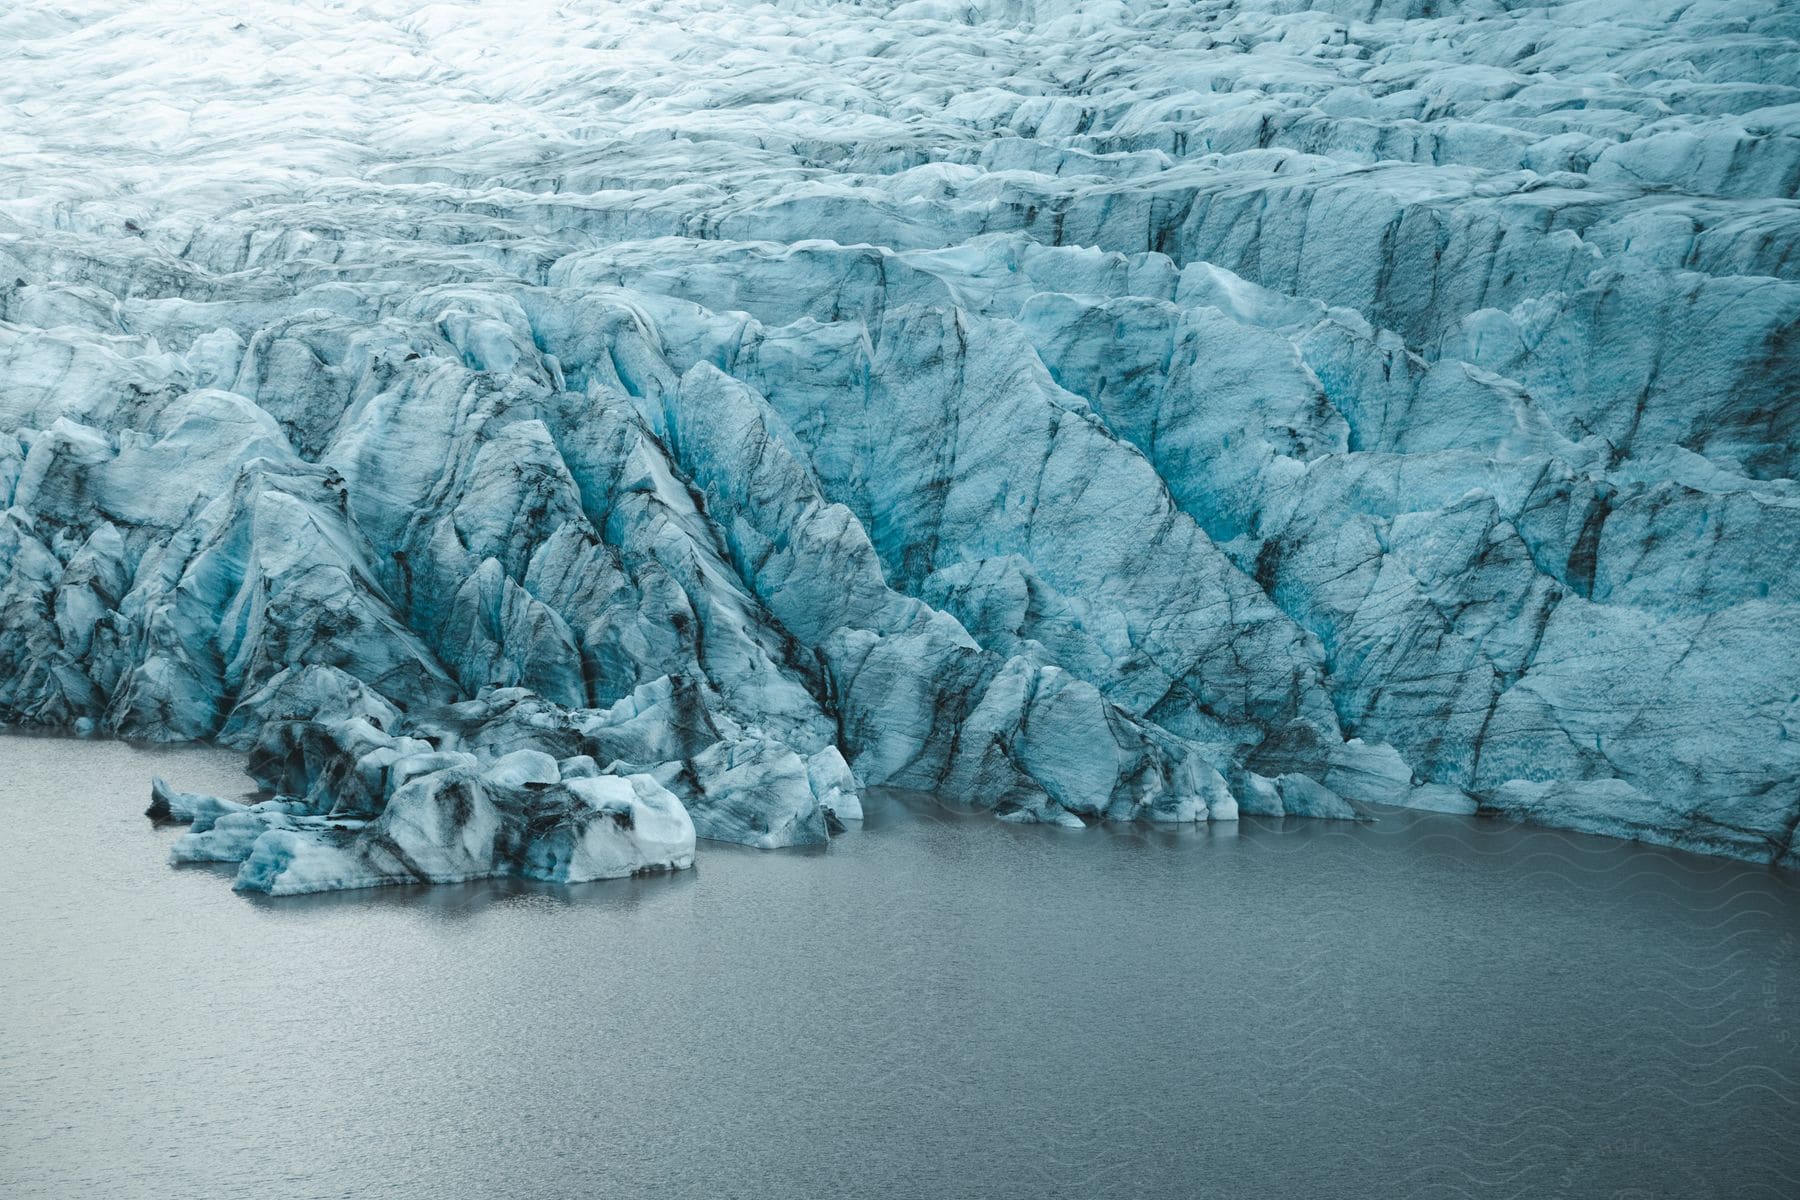 Aerial shot of glaciers near the ocean